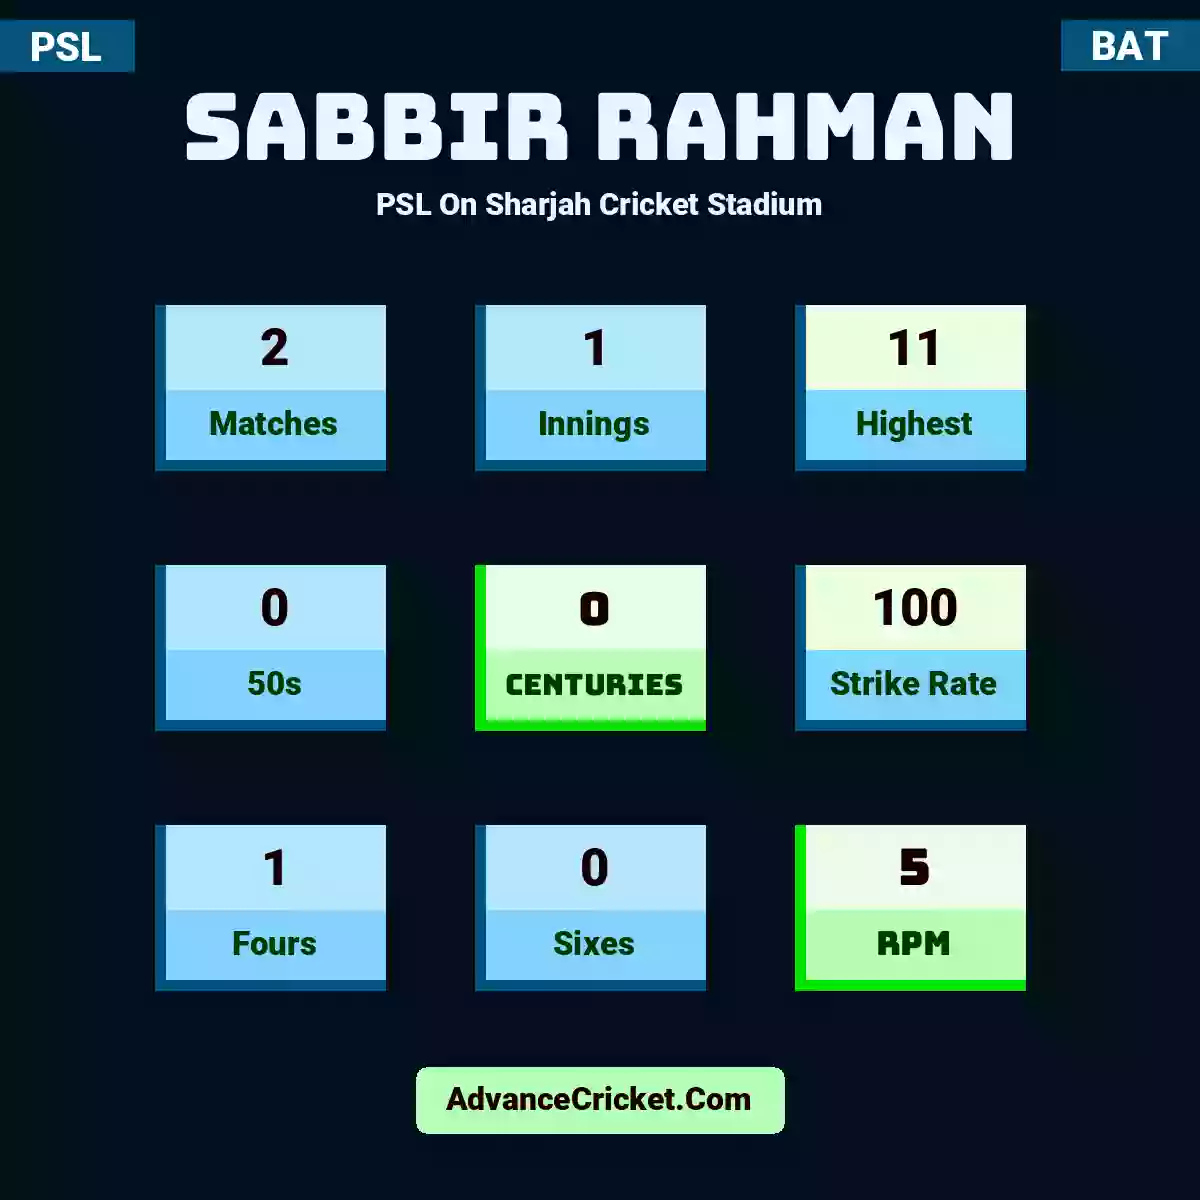 Sabbir Rahman PSL  On Sharjah Cricket Stadium, Sabbir Rahman played 2 matches, scored 11 runs as highest, 0 half-centuries, and 0 centuries, with a strike rate of 100. S.Rahman hit 1 fours and 0 sixes, with an RPM of 5.